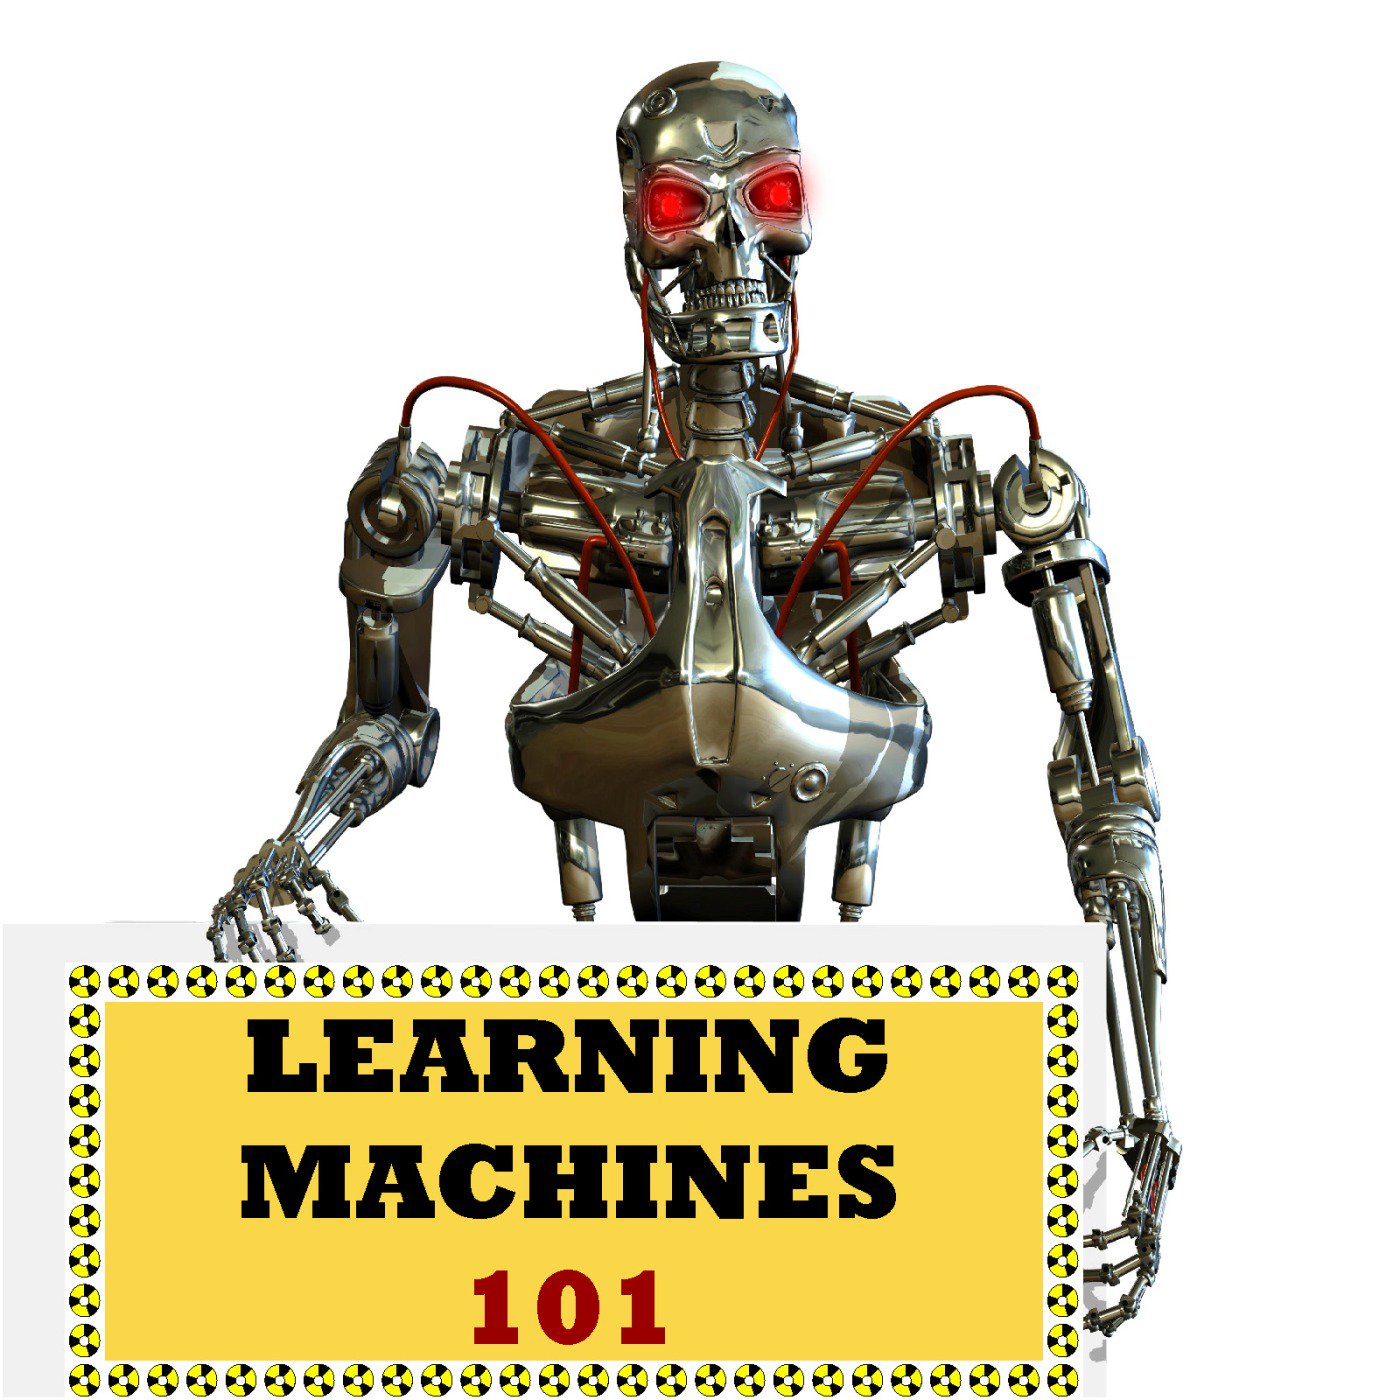 Learning Machines 101 Podcast Logo